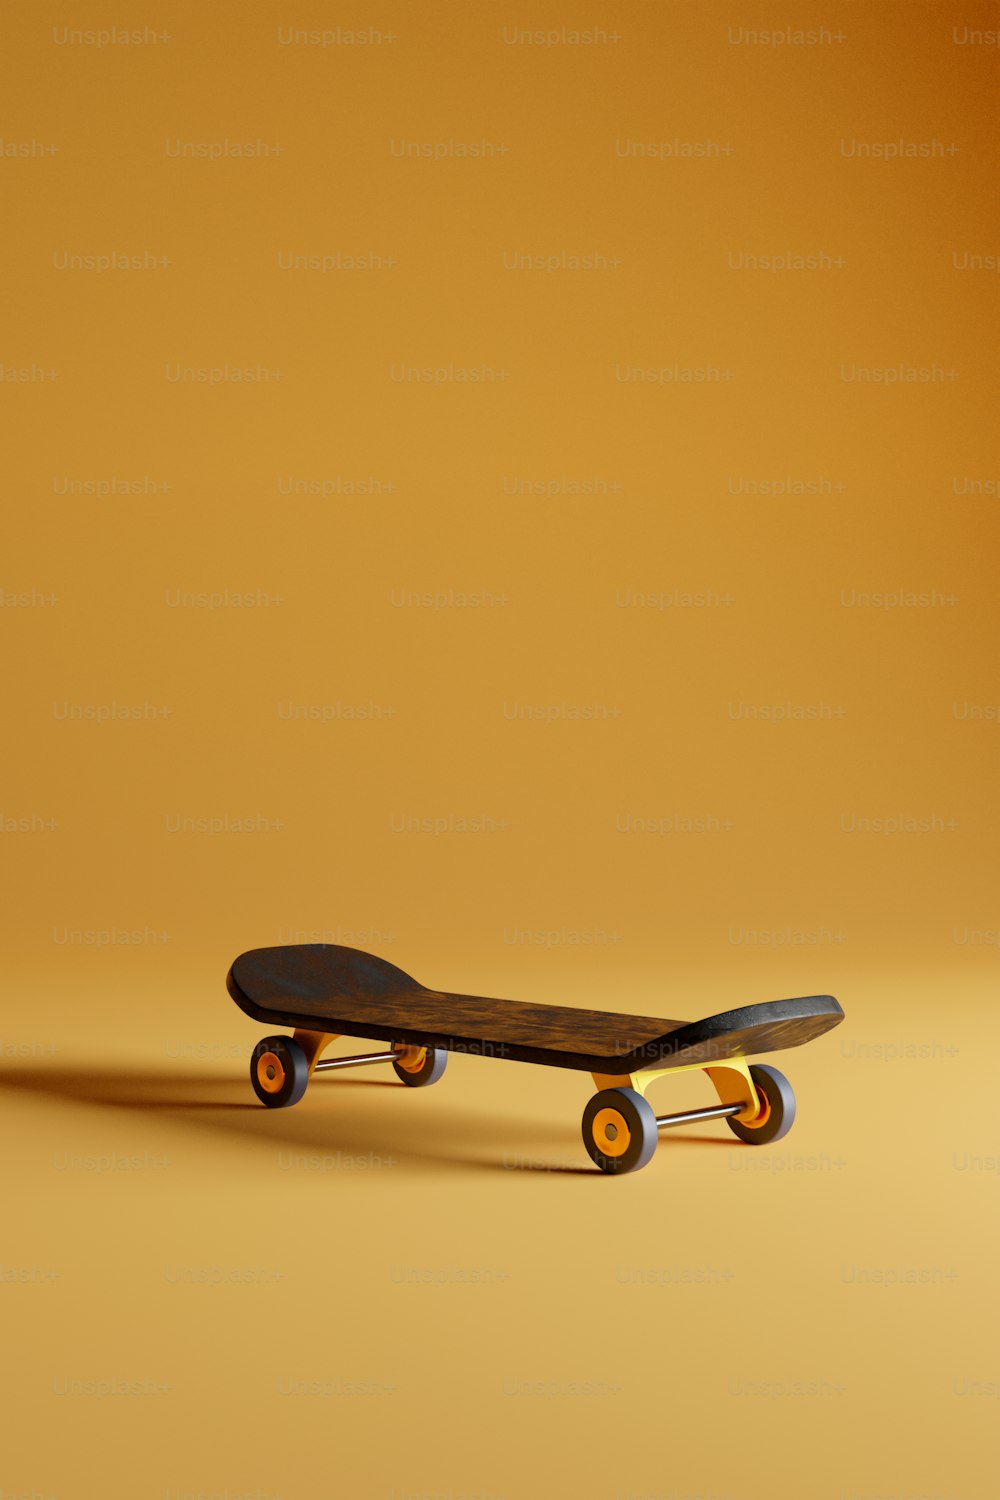 uno skateboard seduto sopra un pavimento giallo